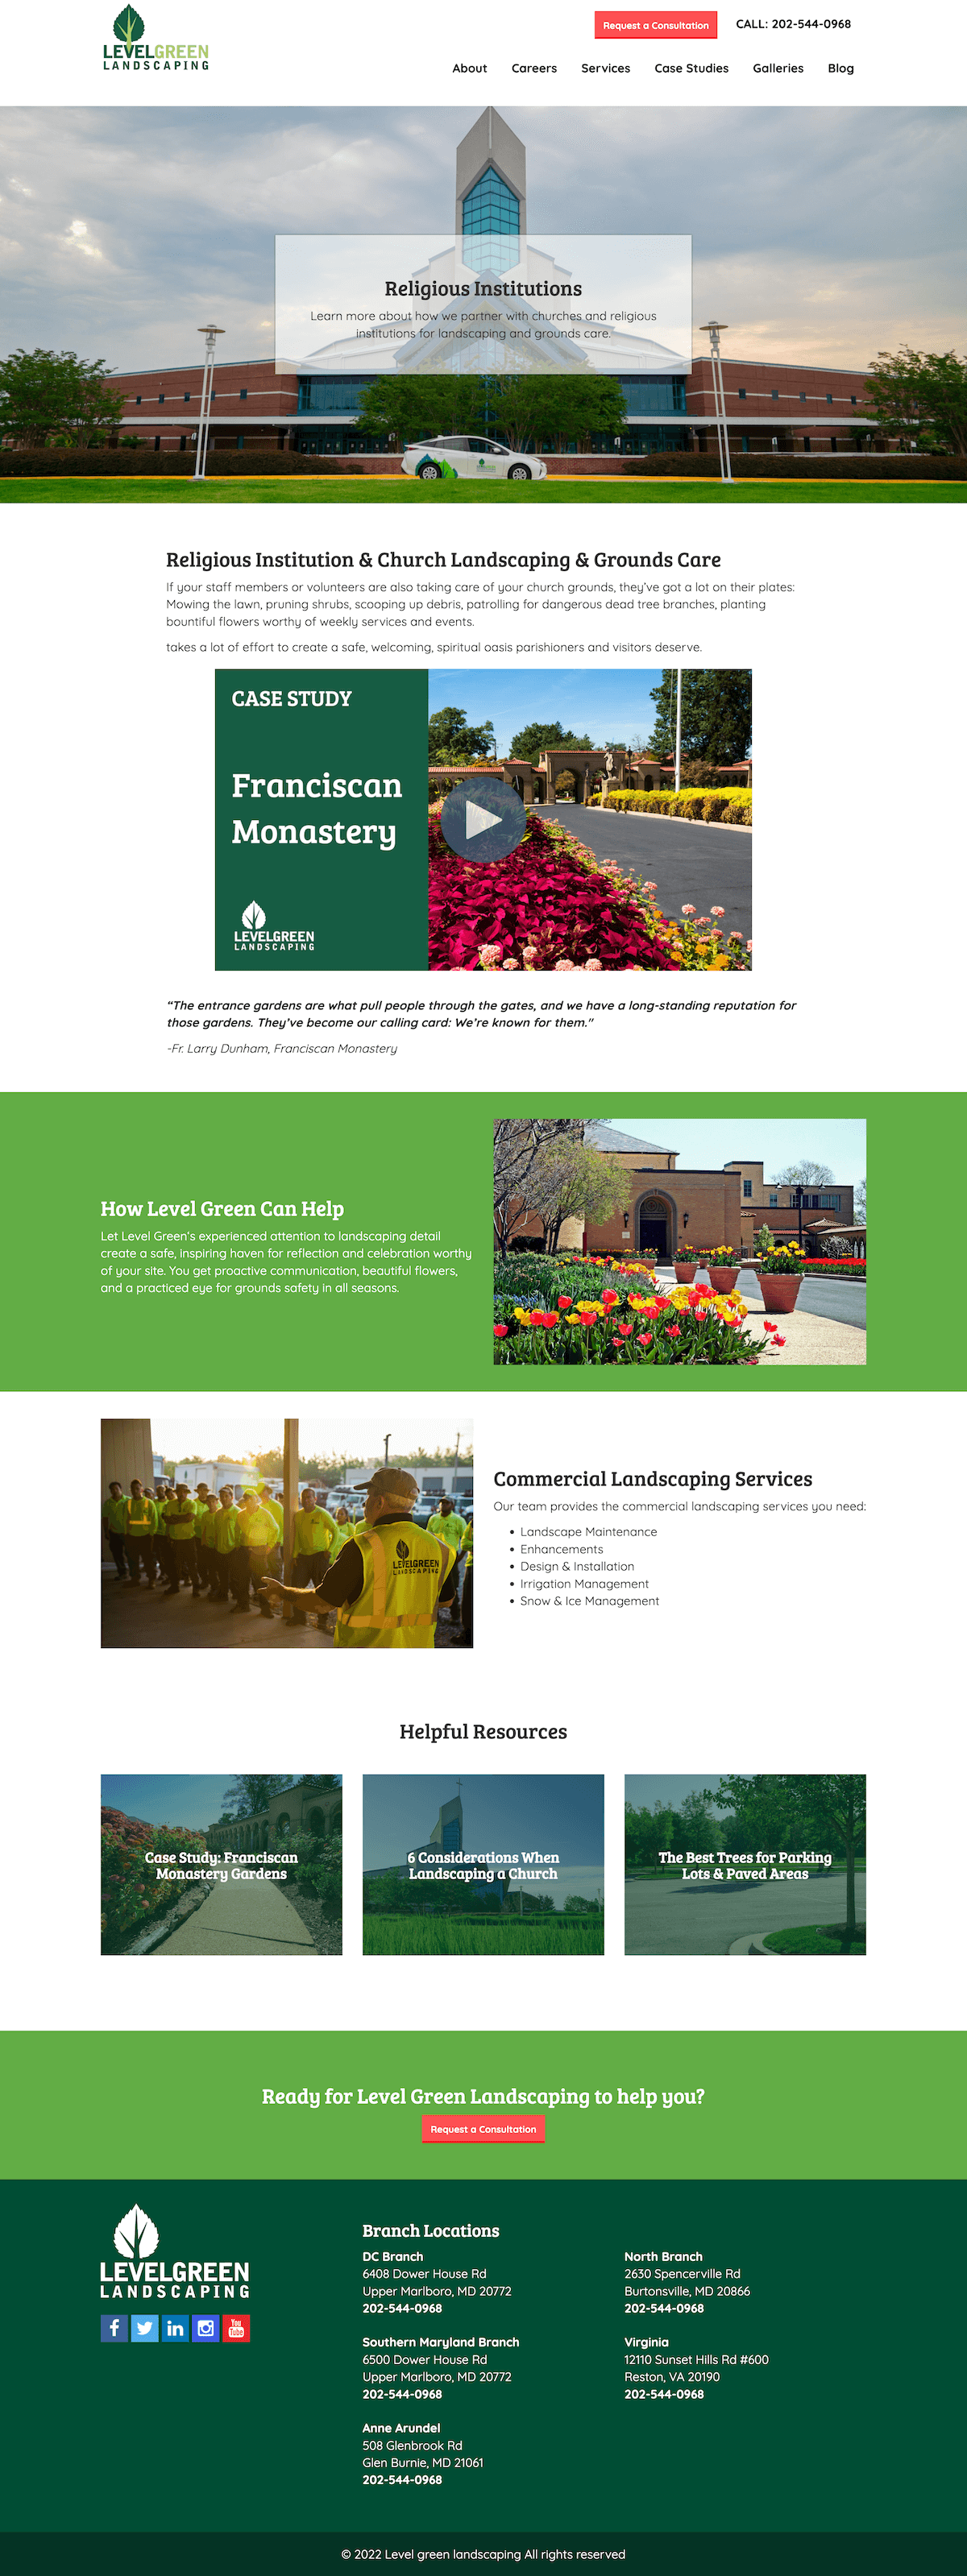 commercial landscaping testimonials on website - level green